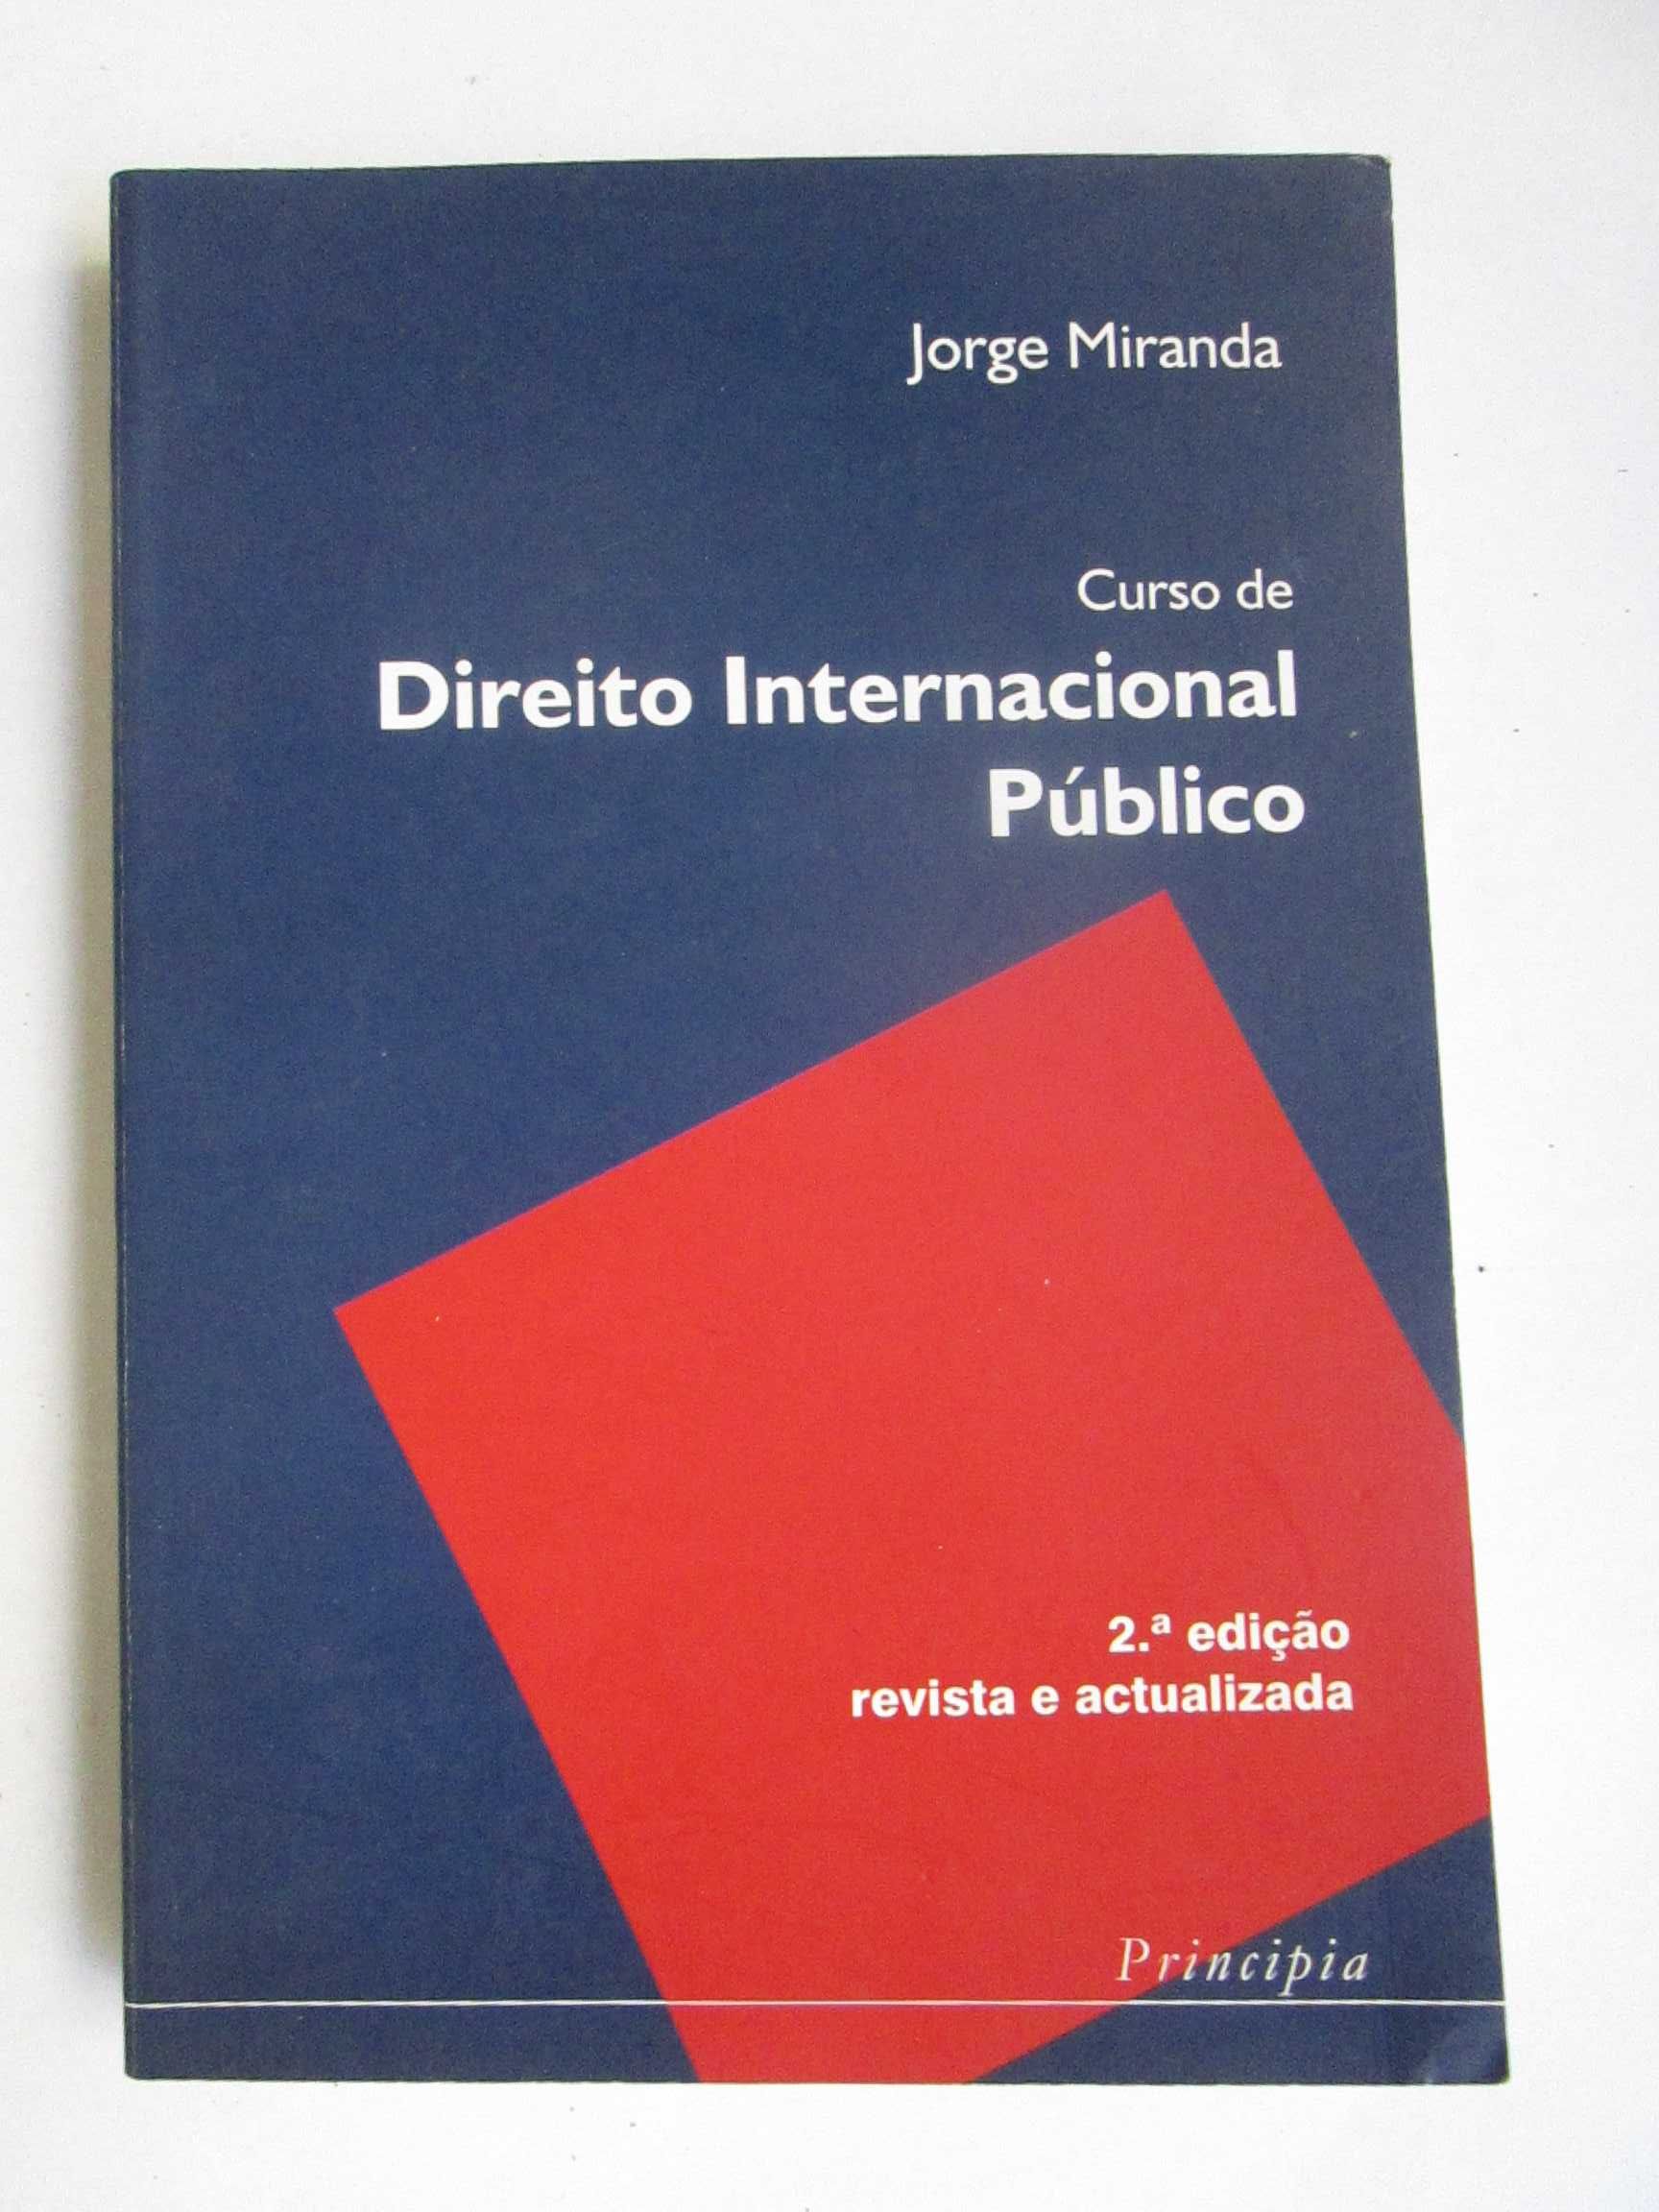 Curso de Direito Internacional Público, de Jorge Miranda